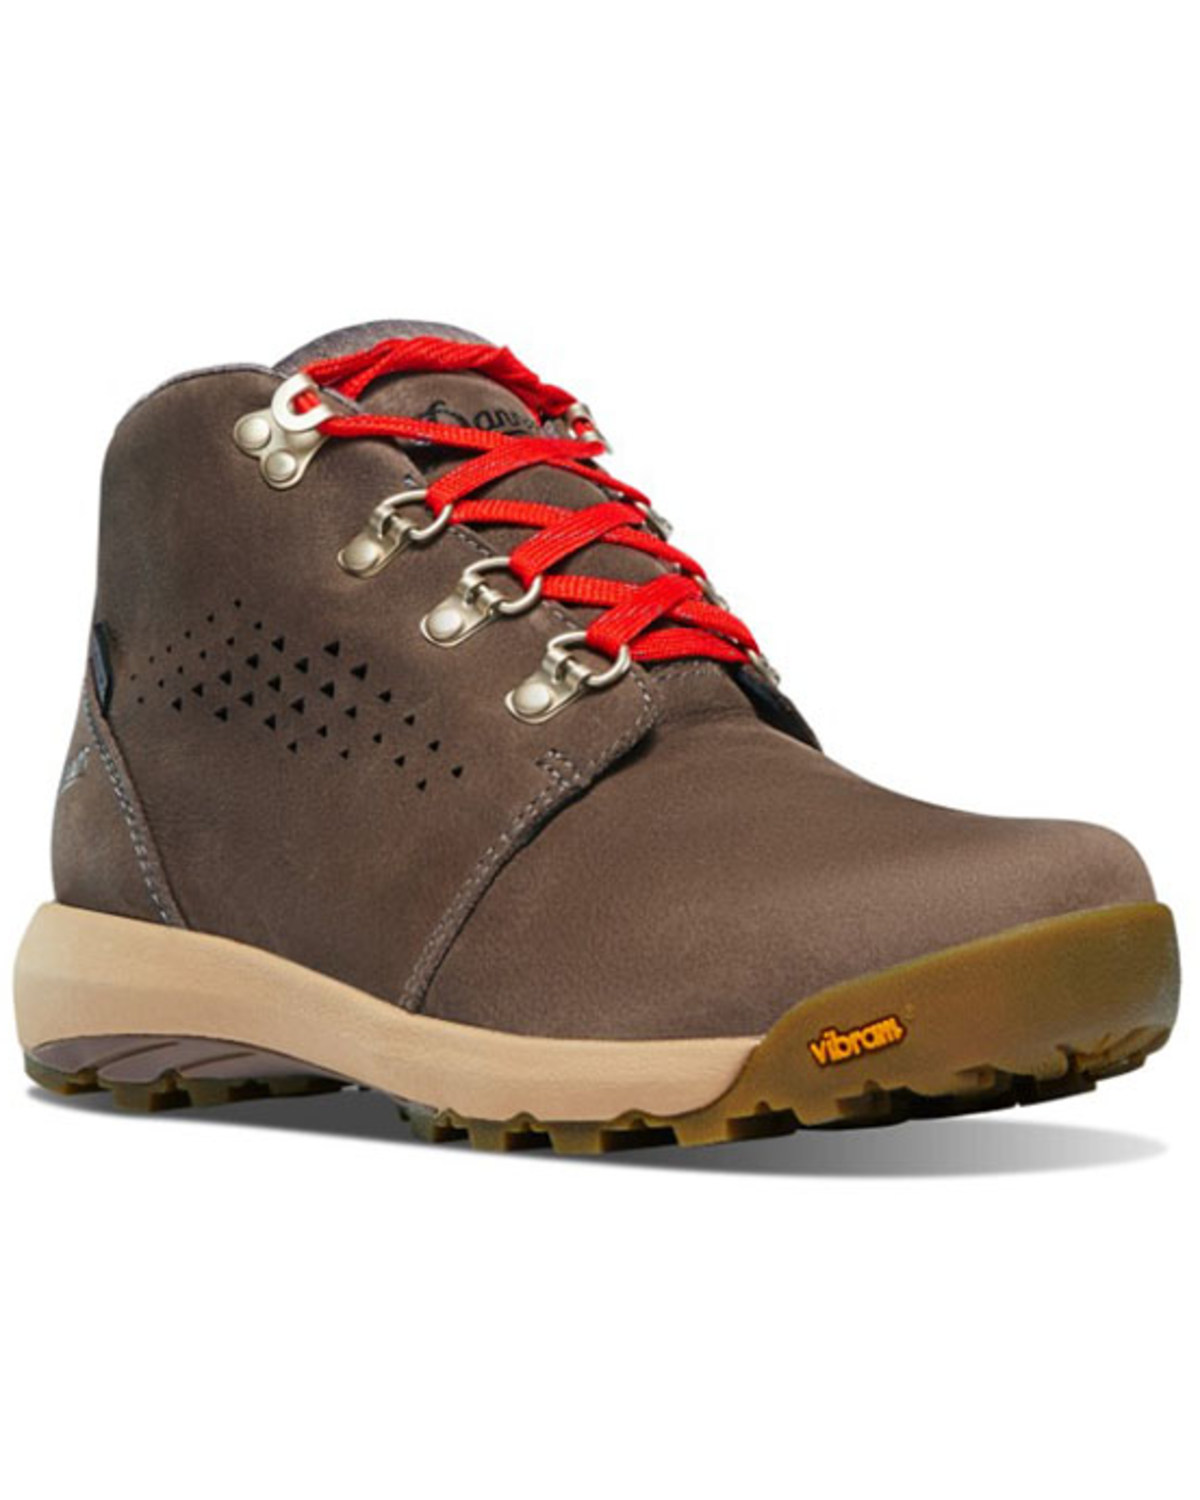 Danner Women's Inquire Chukka Hiking Boots - Soft Toe